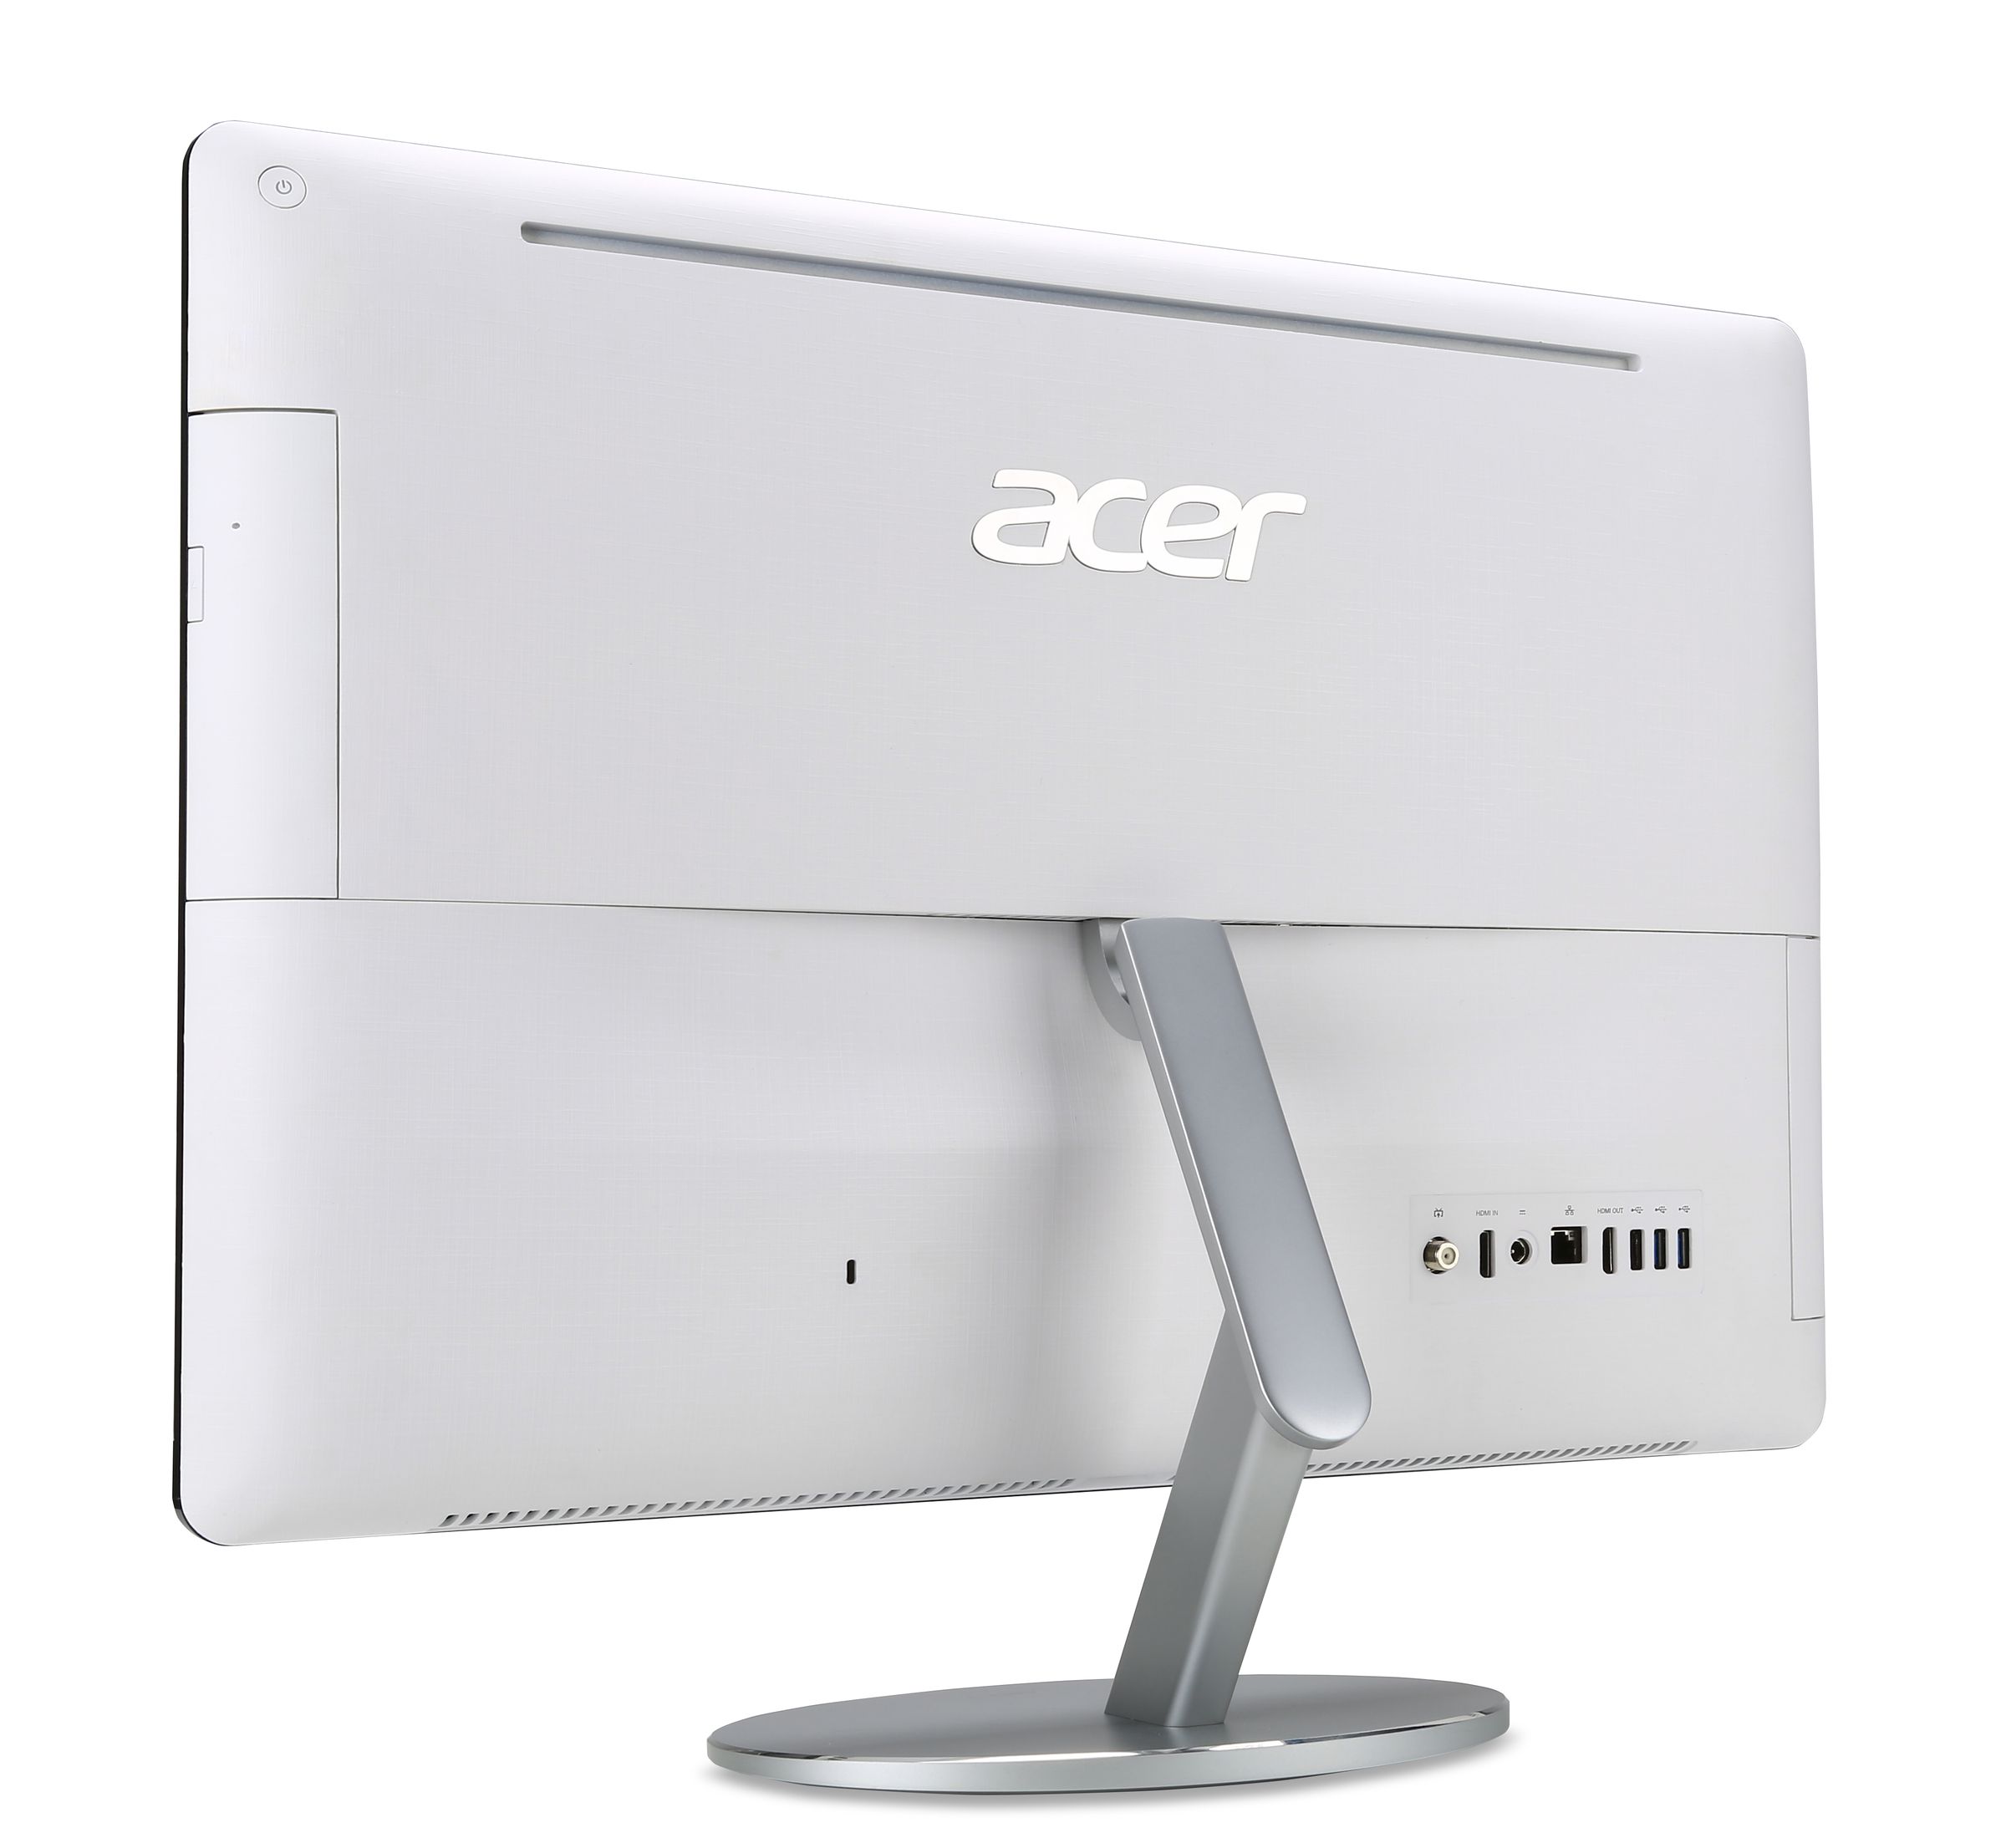 Acer Windows 10 machines